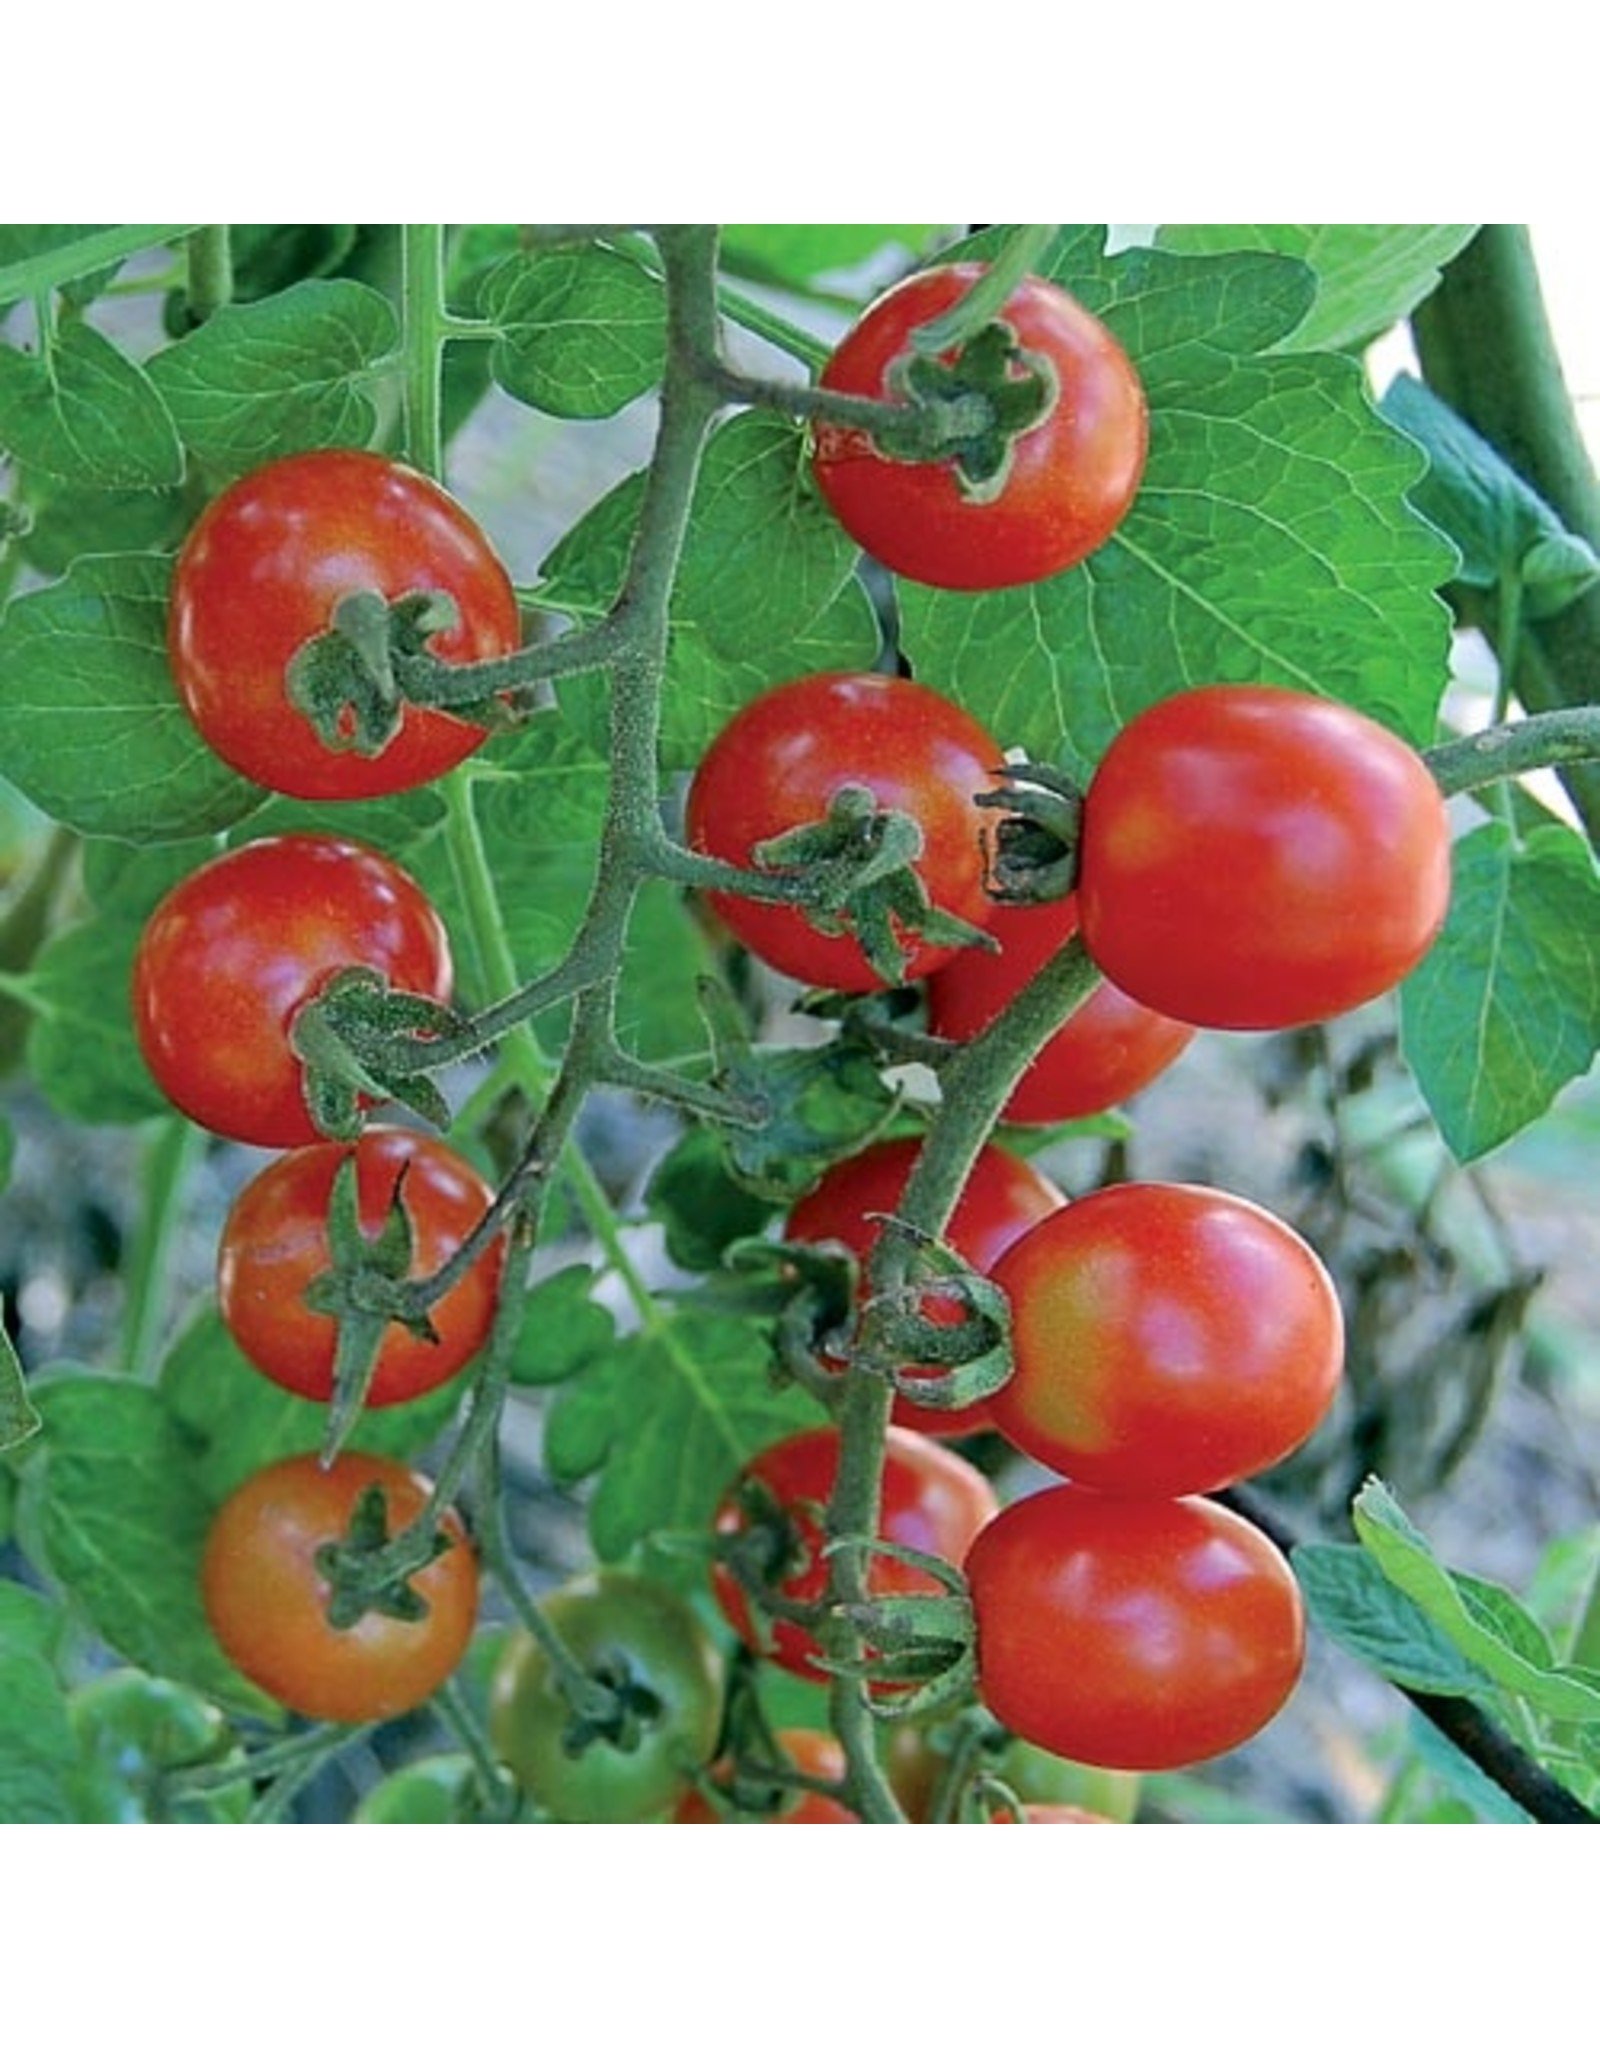 Seed Savers Tomato - Mexico Midget